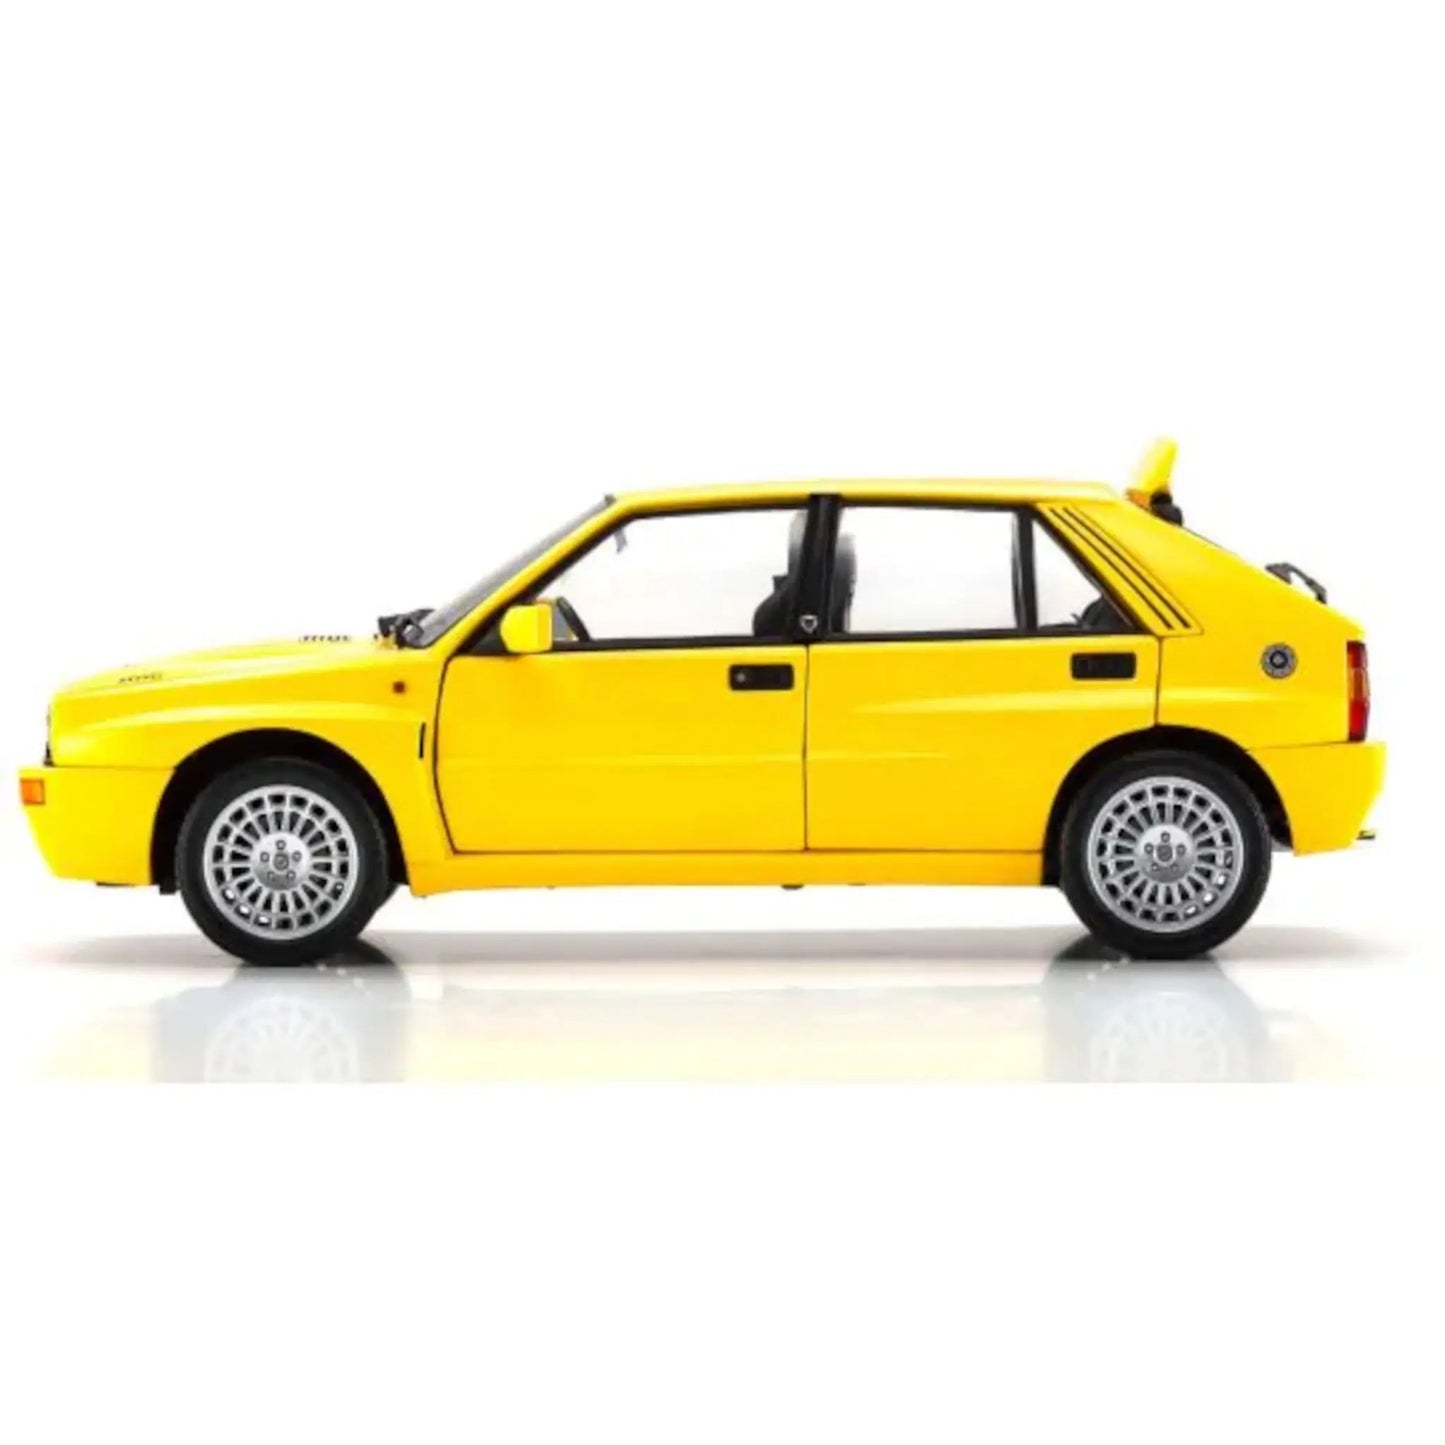 Lancia Delta HF Integrale jaune gialla Kyosho 1/18 - kyo8343y